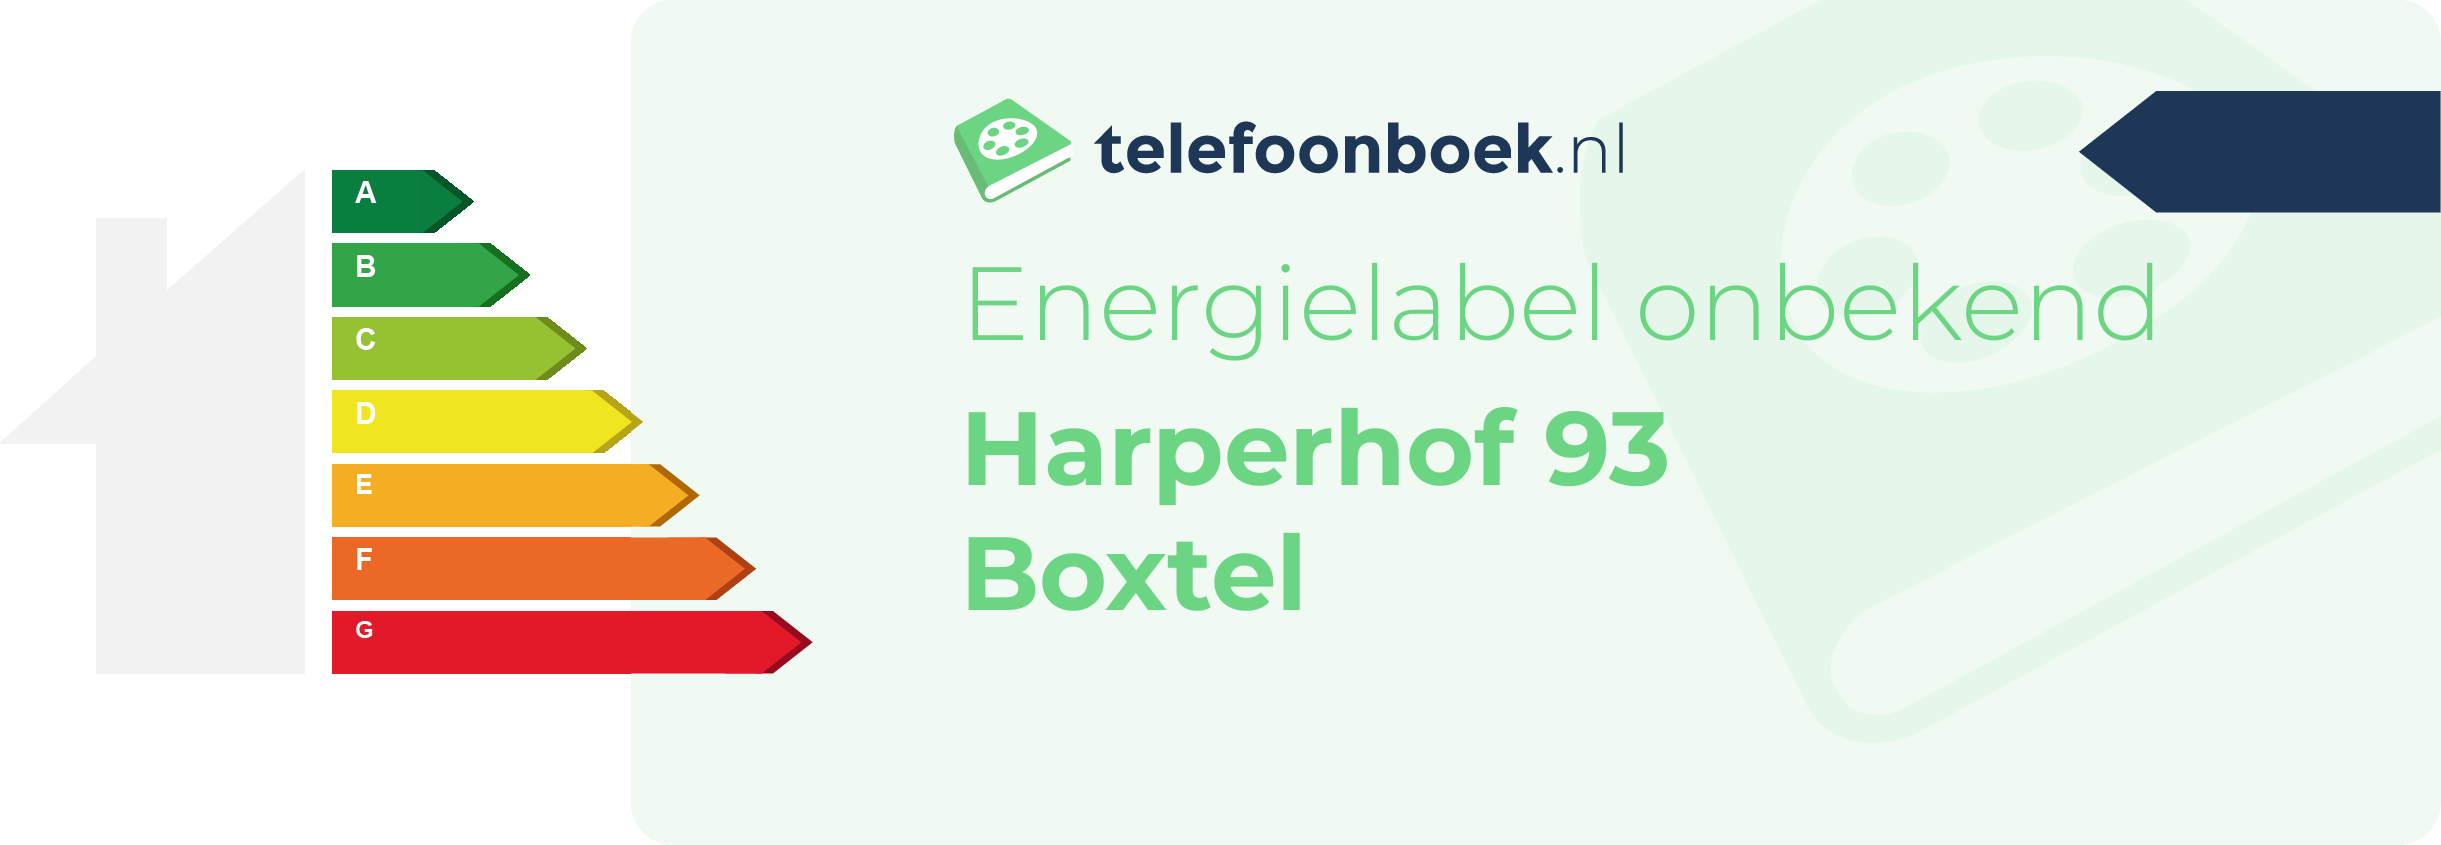 Energielabel Harperhof 93 Boxtel